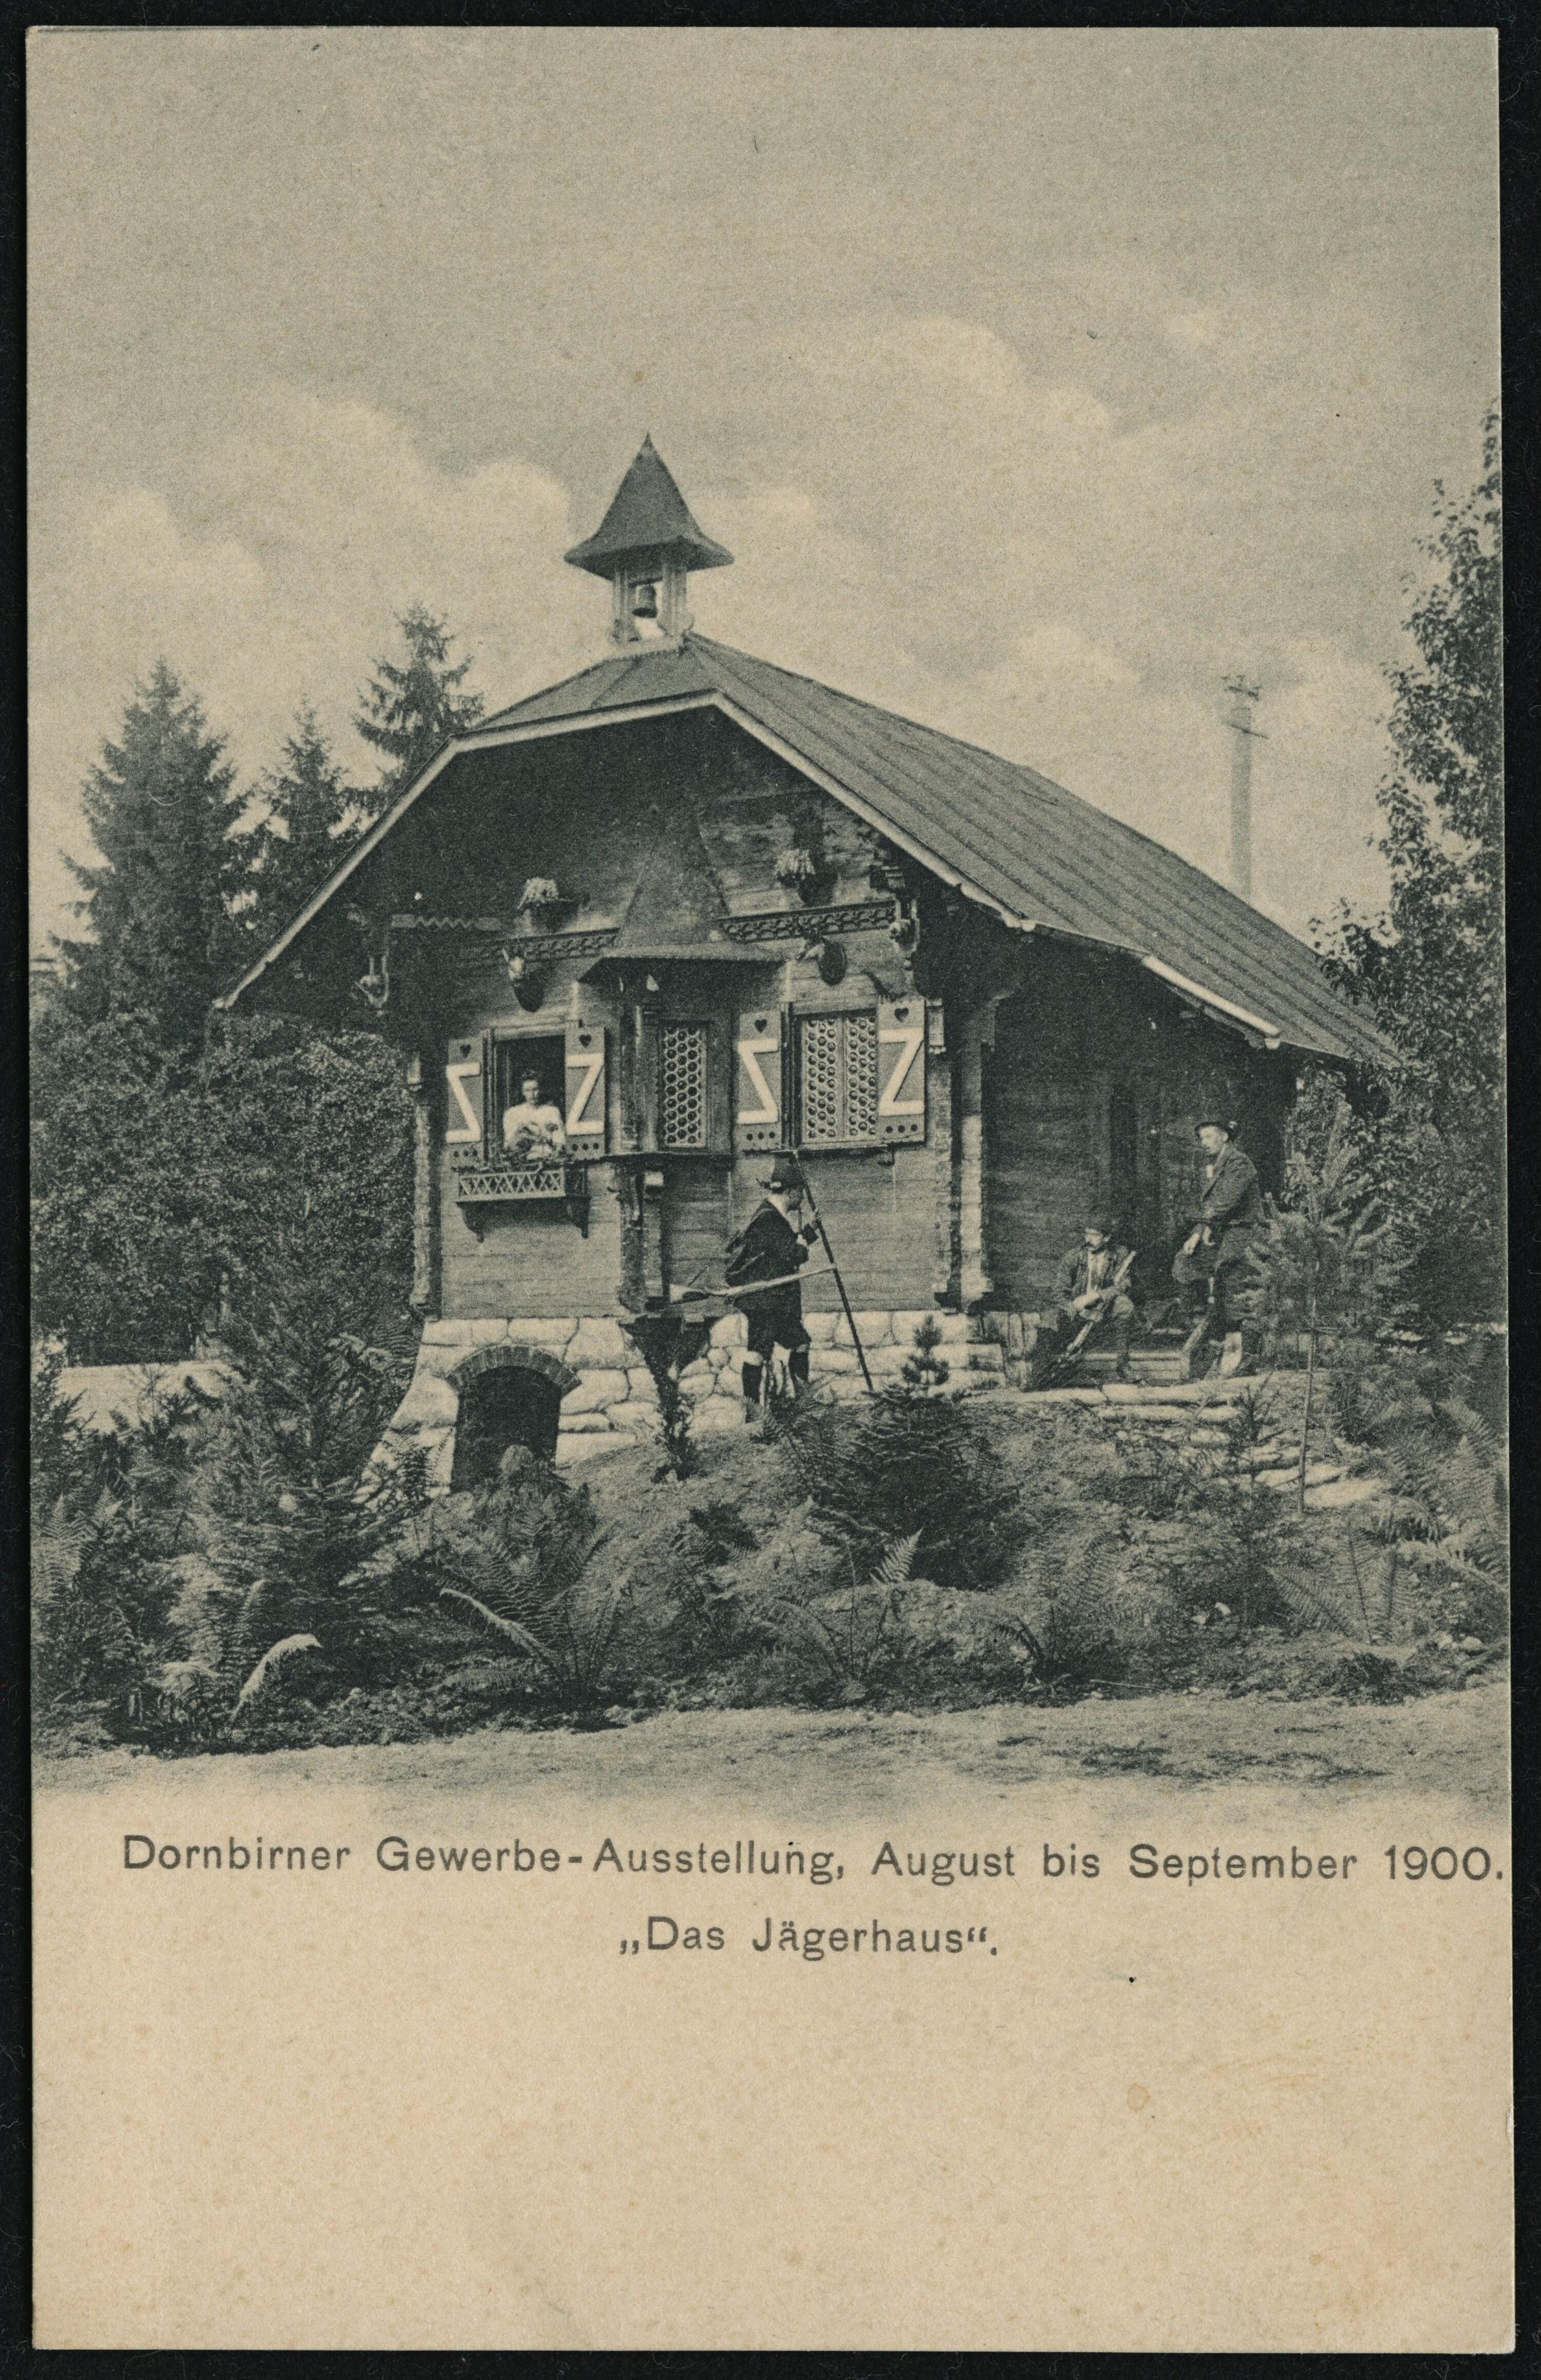 Dornbirner Gewerbe-Ausstellung, August bis September 1900></div>


    <hr>
    <div class=